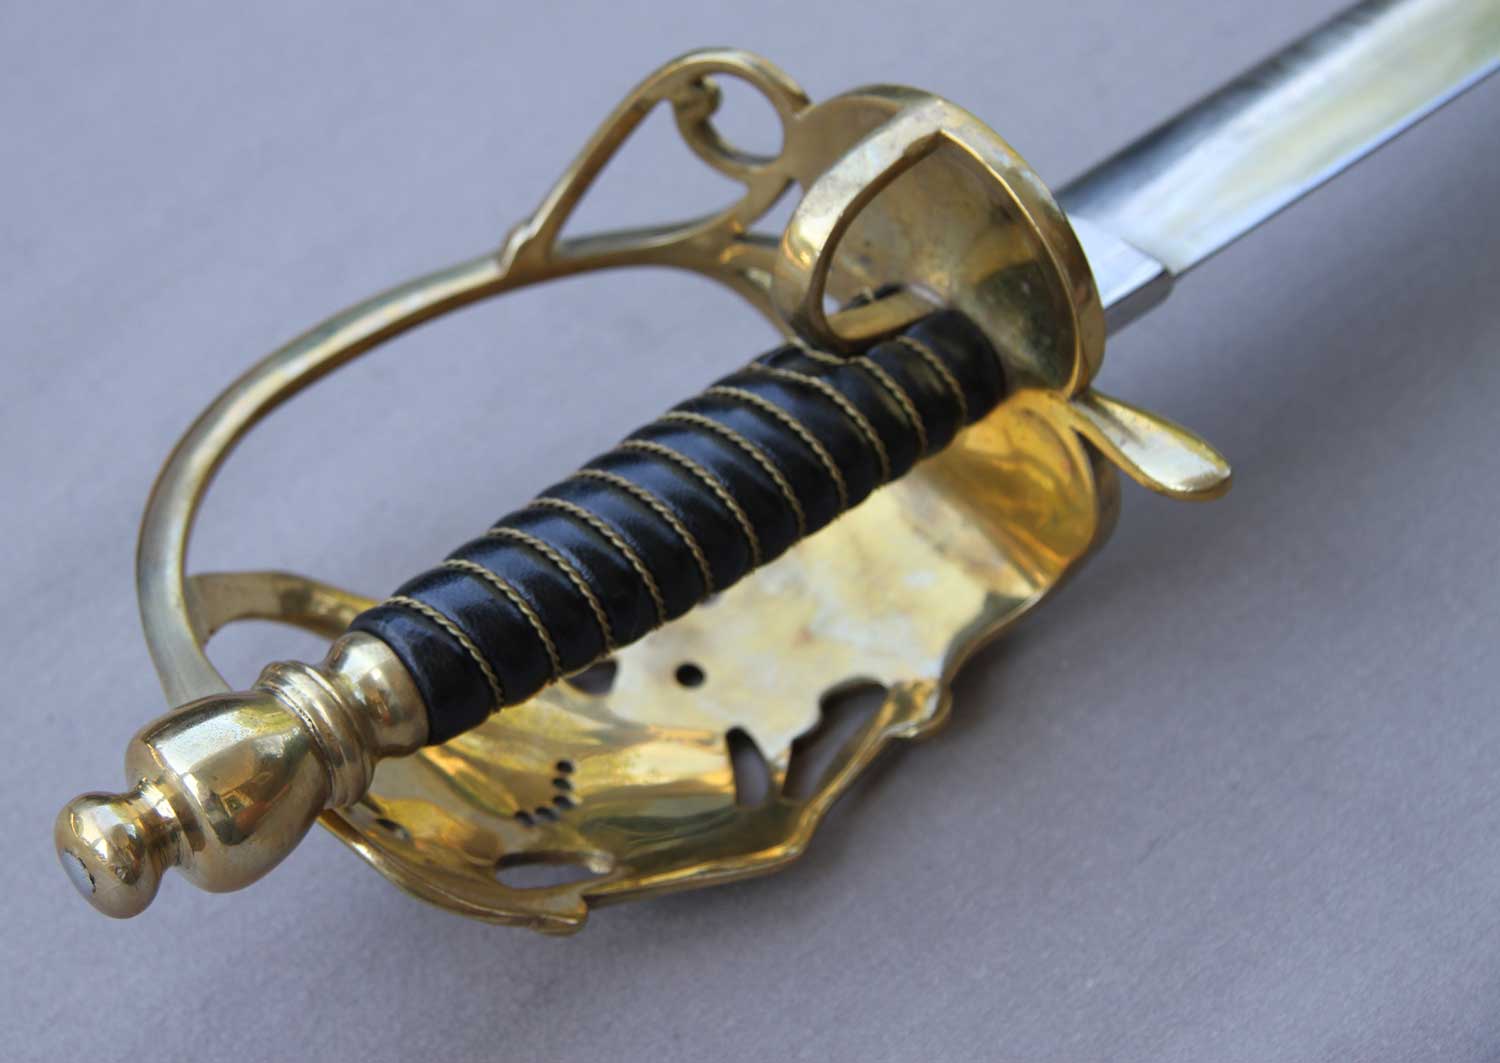 Prussian, Cavalry Sword